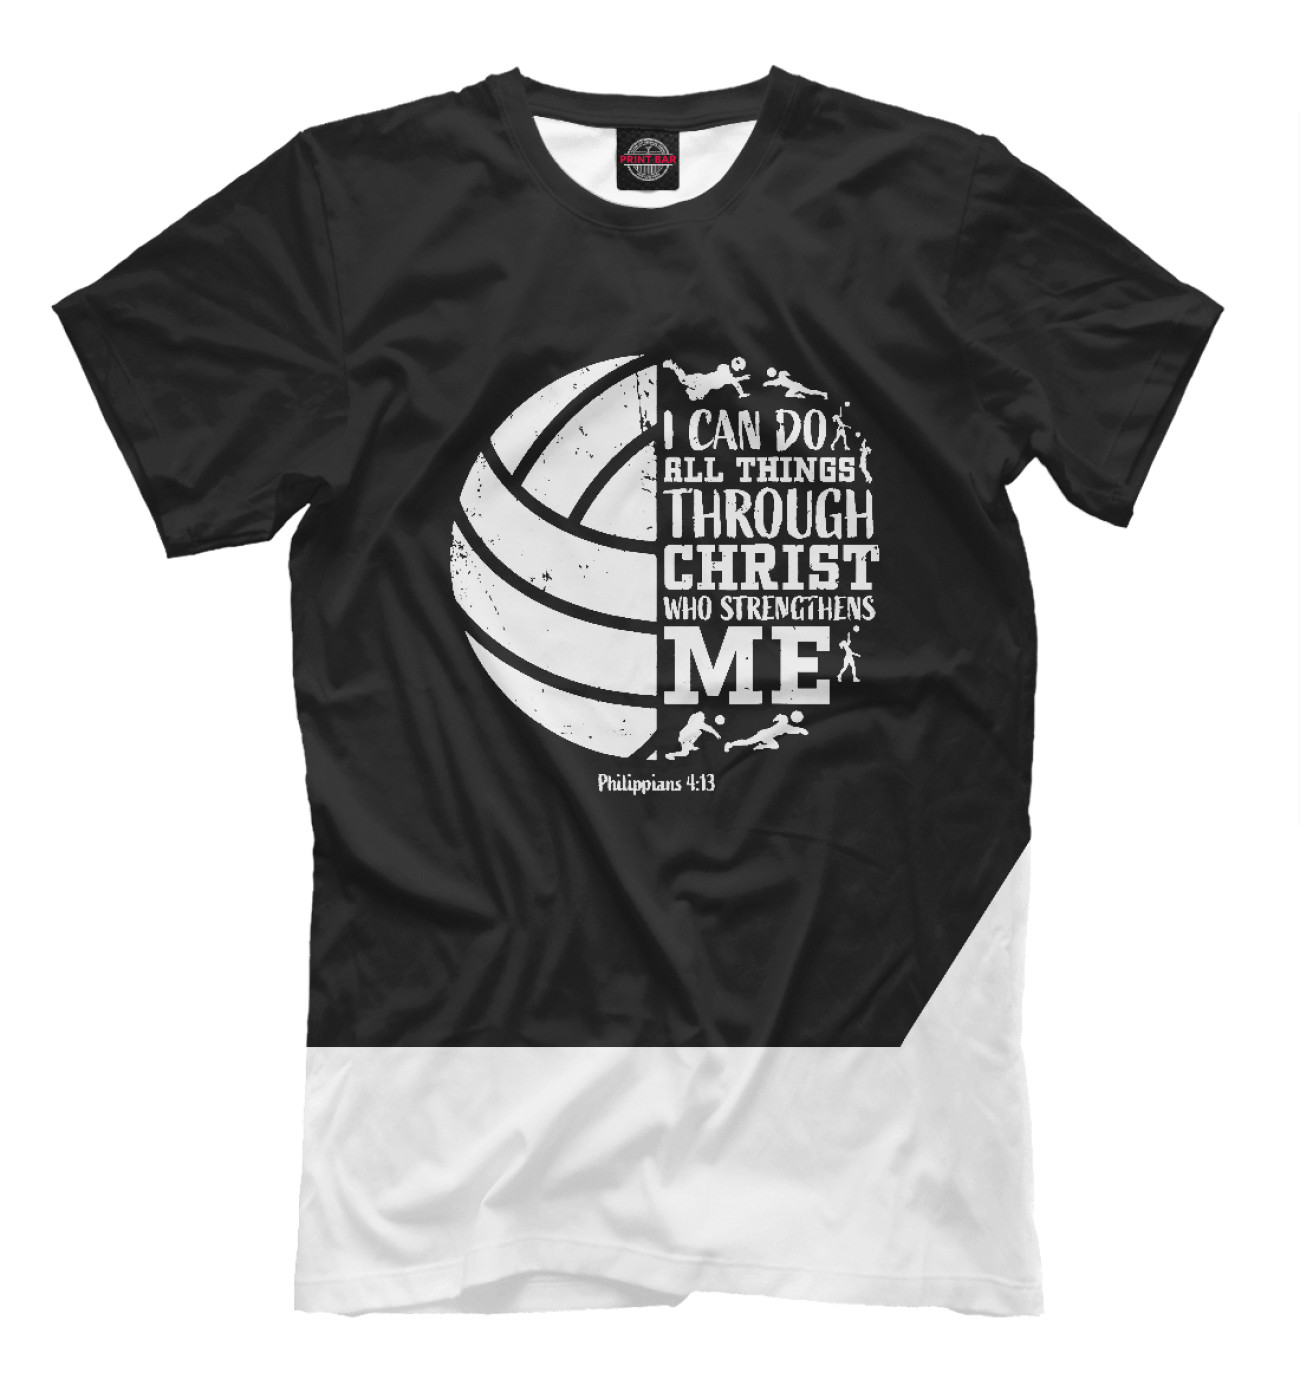 Мужская Футболка Volleyball, артикул: VLB-388083-fut-2